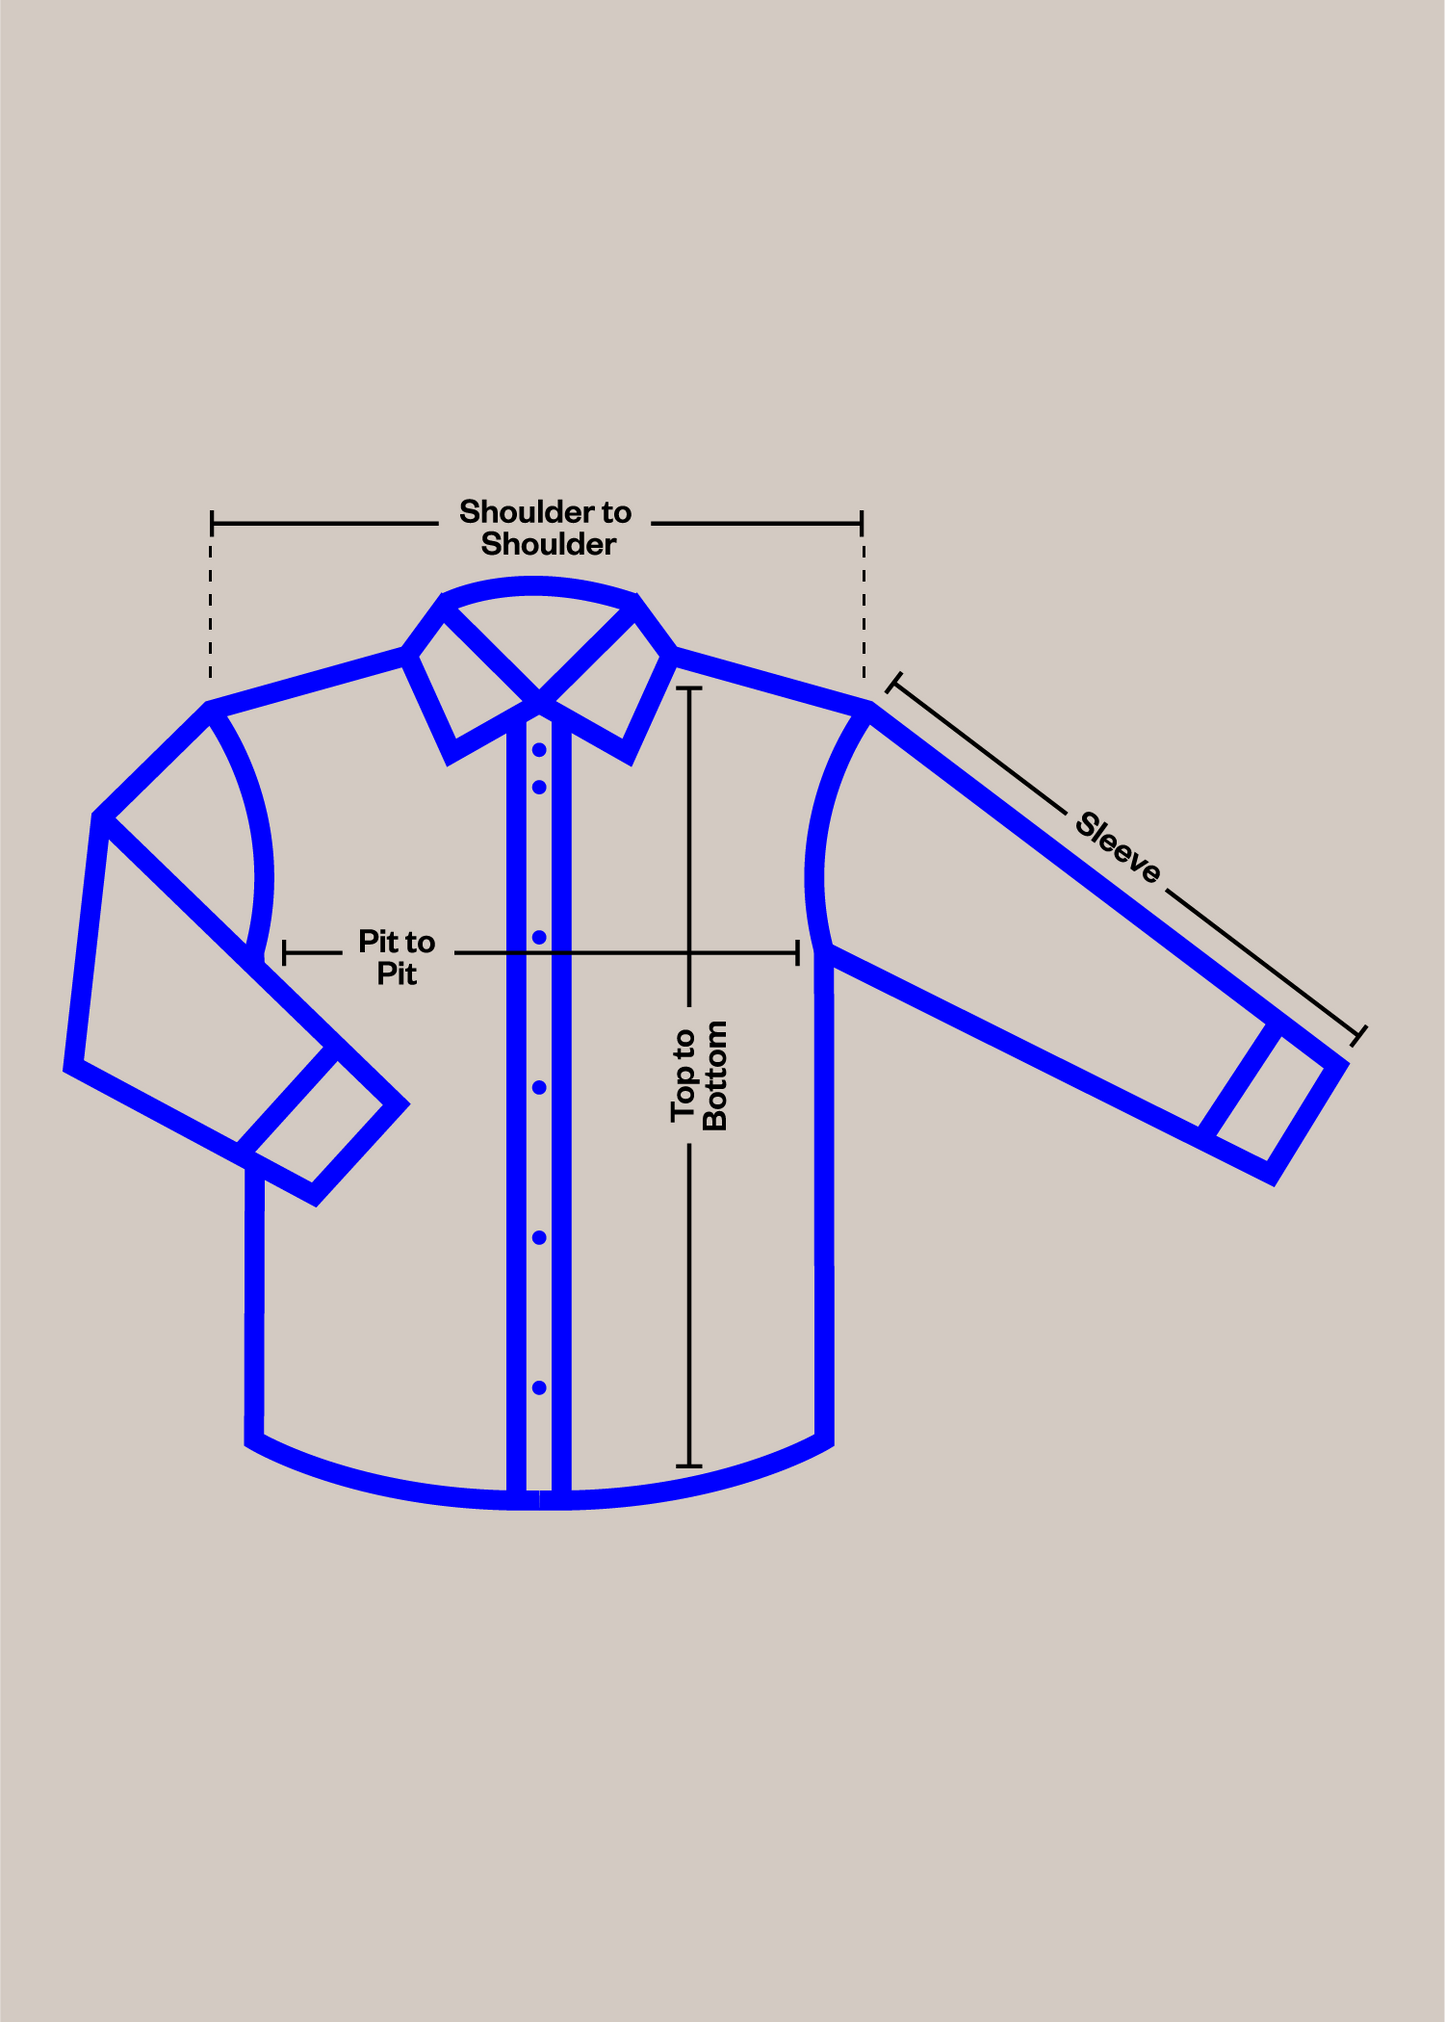 Vintage 1980s US Air Force Long Sleeve Button Up Uniform Shirt Size S/M